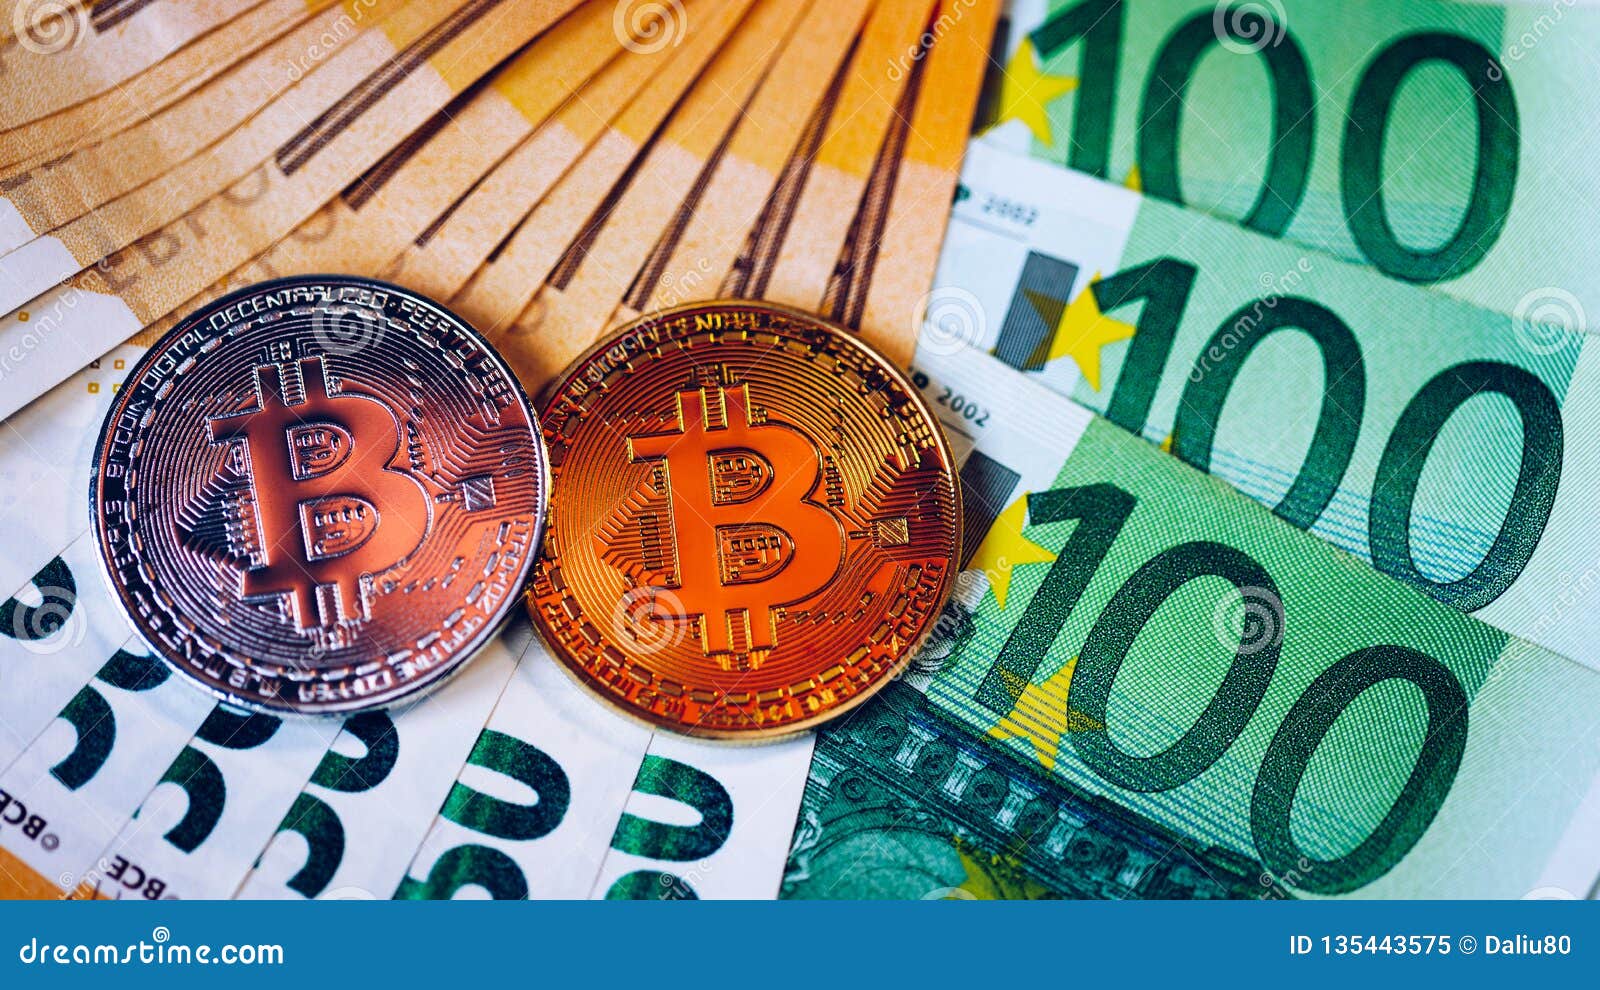 can you buy bitcoin with euros